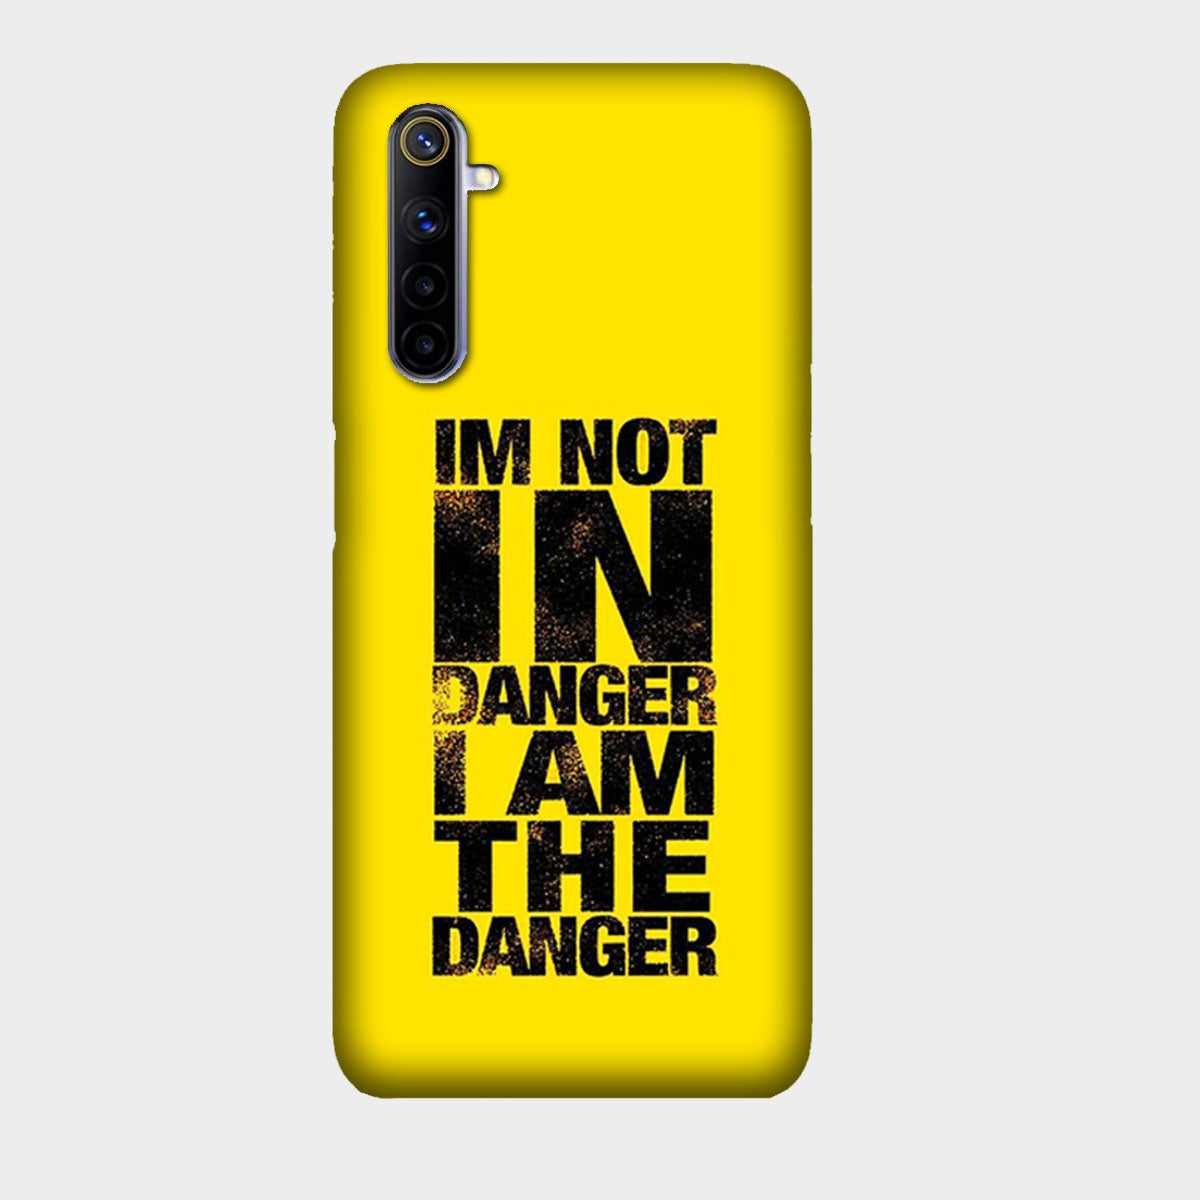 I am not in Danger, I am the Danger - Mobile Phone Cover - Hard Case